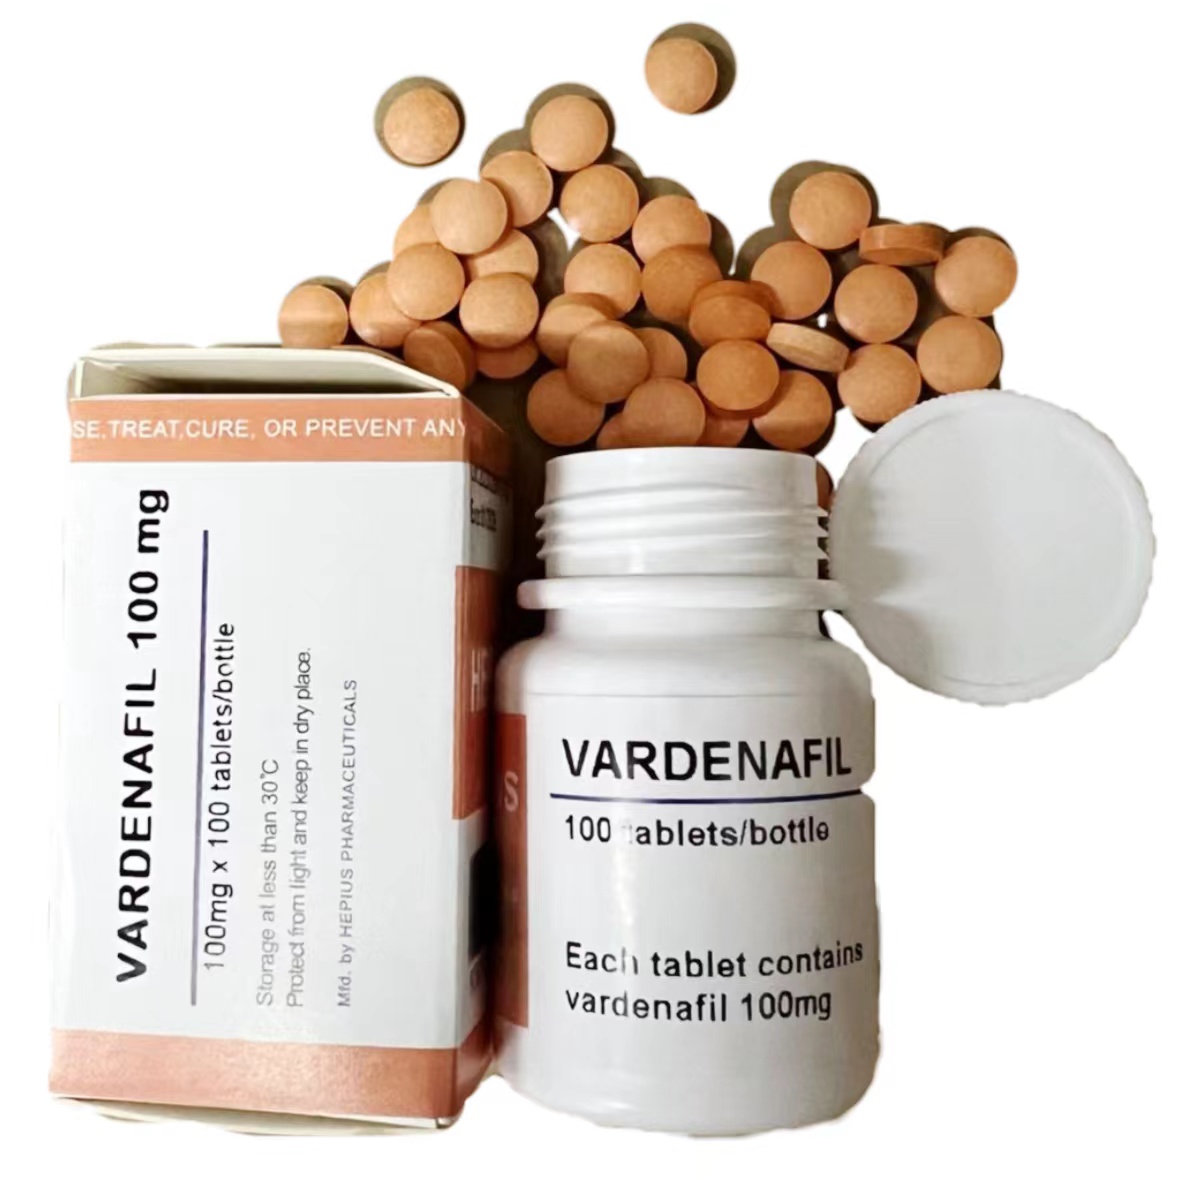 Vardenafil 100mg/bottle 100tablets